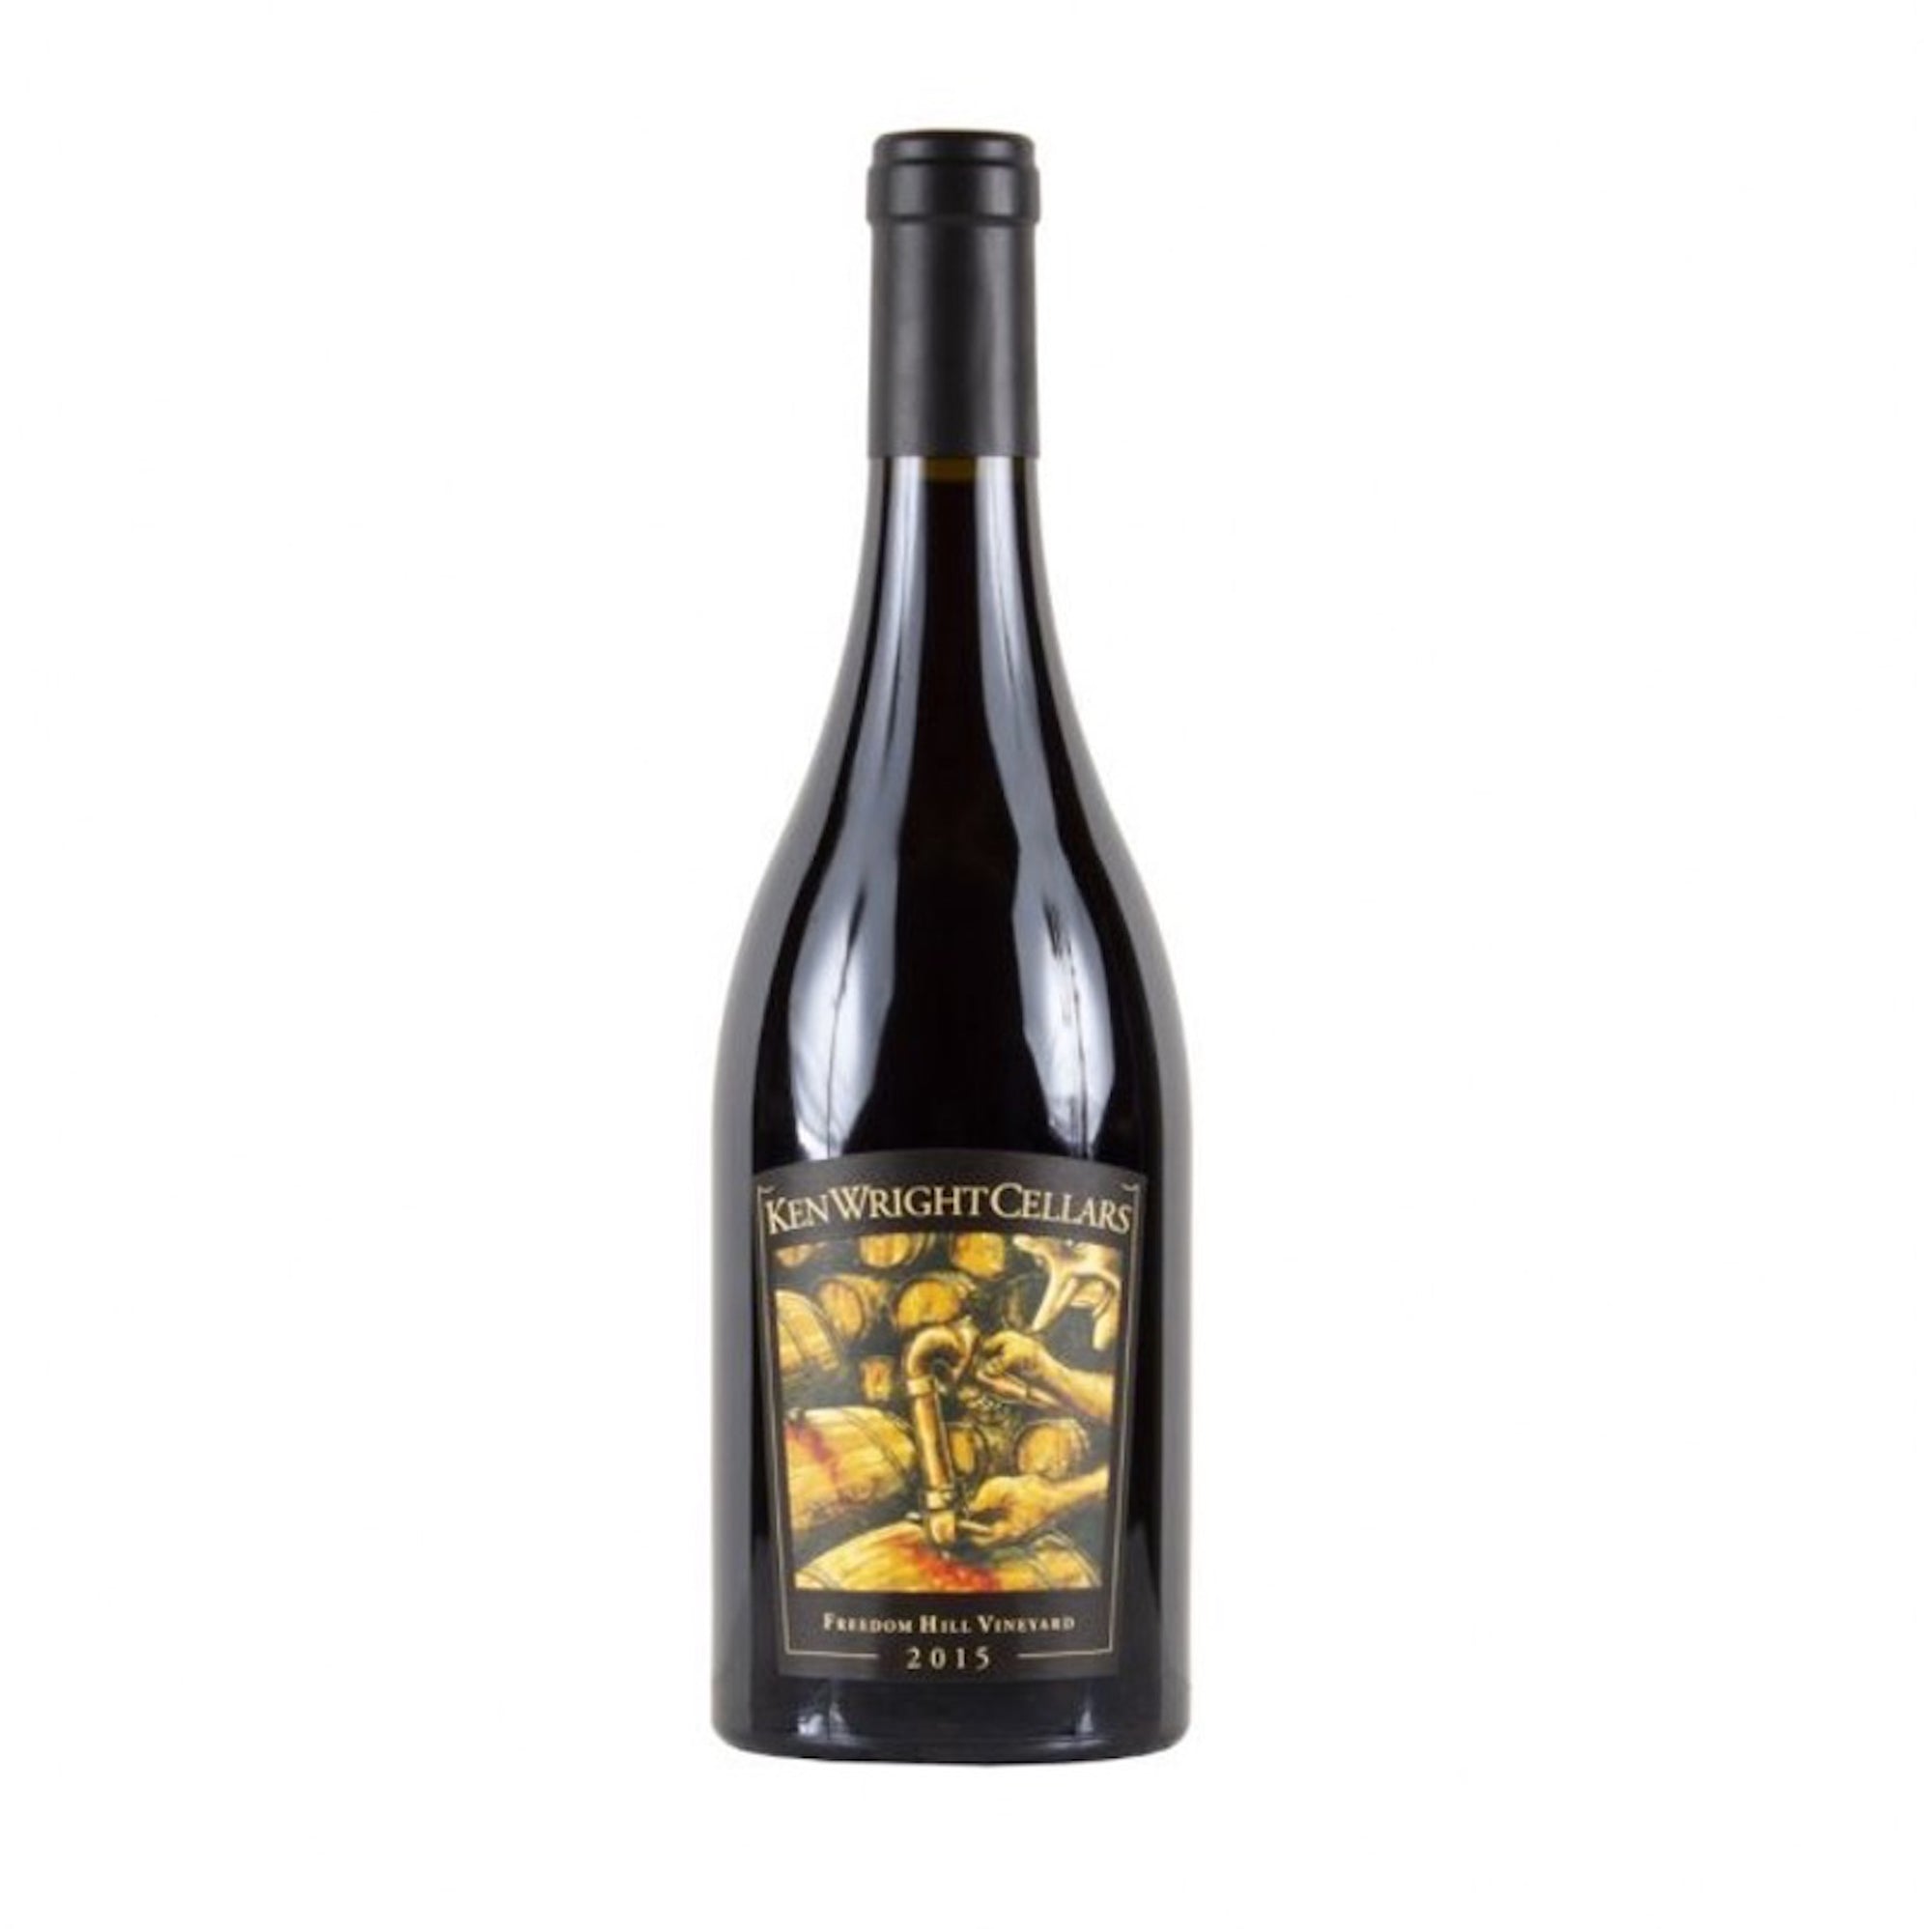 KEN WRIGHT CELLARS "Freedom Hill Vineyard" Pinot Noir 2015